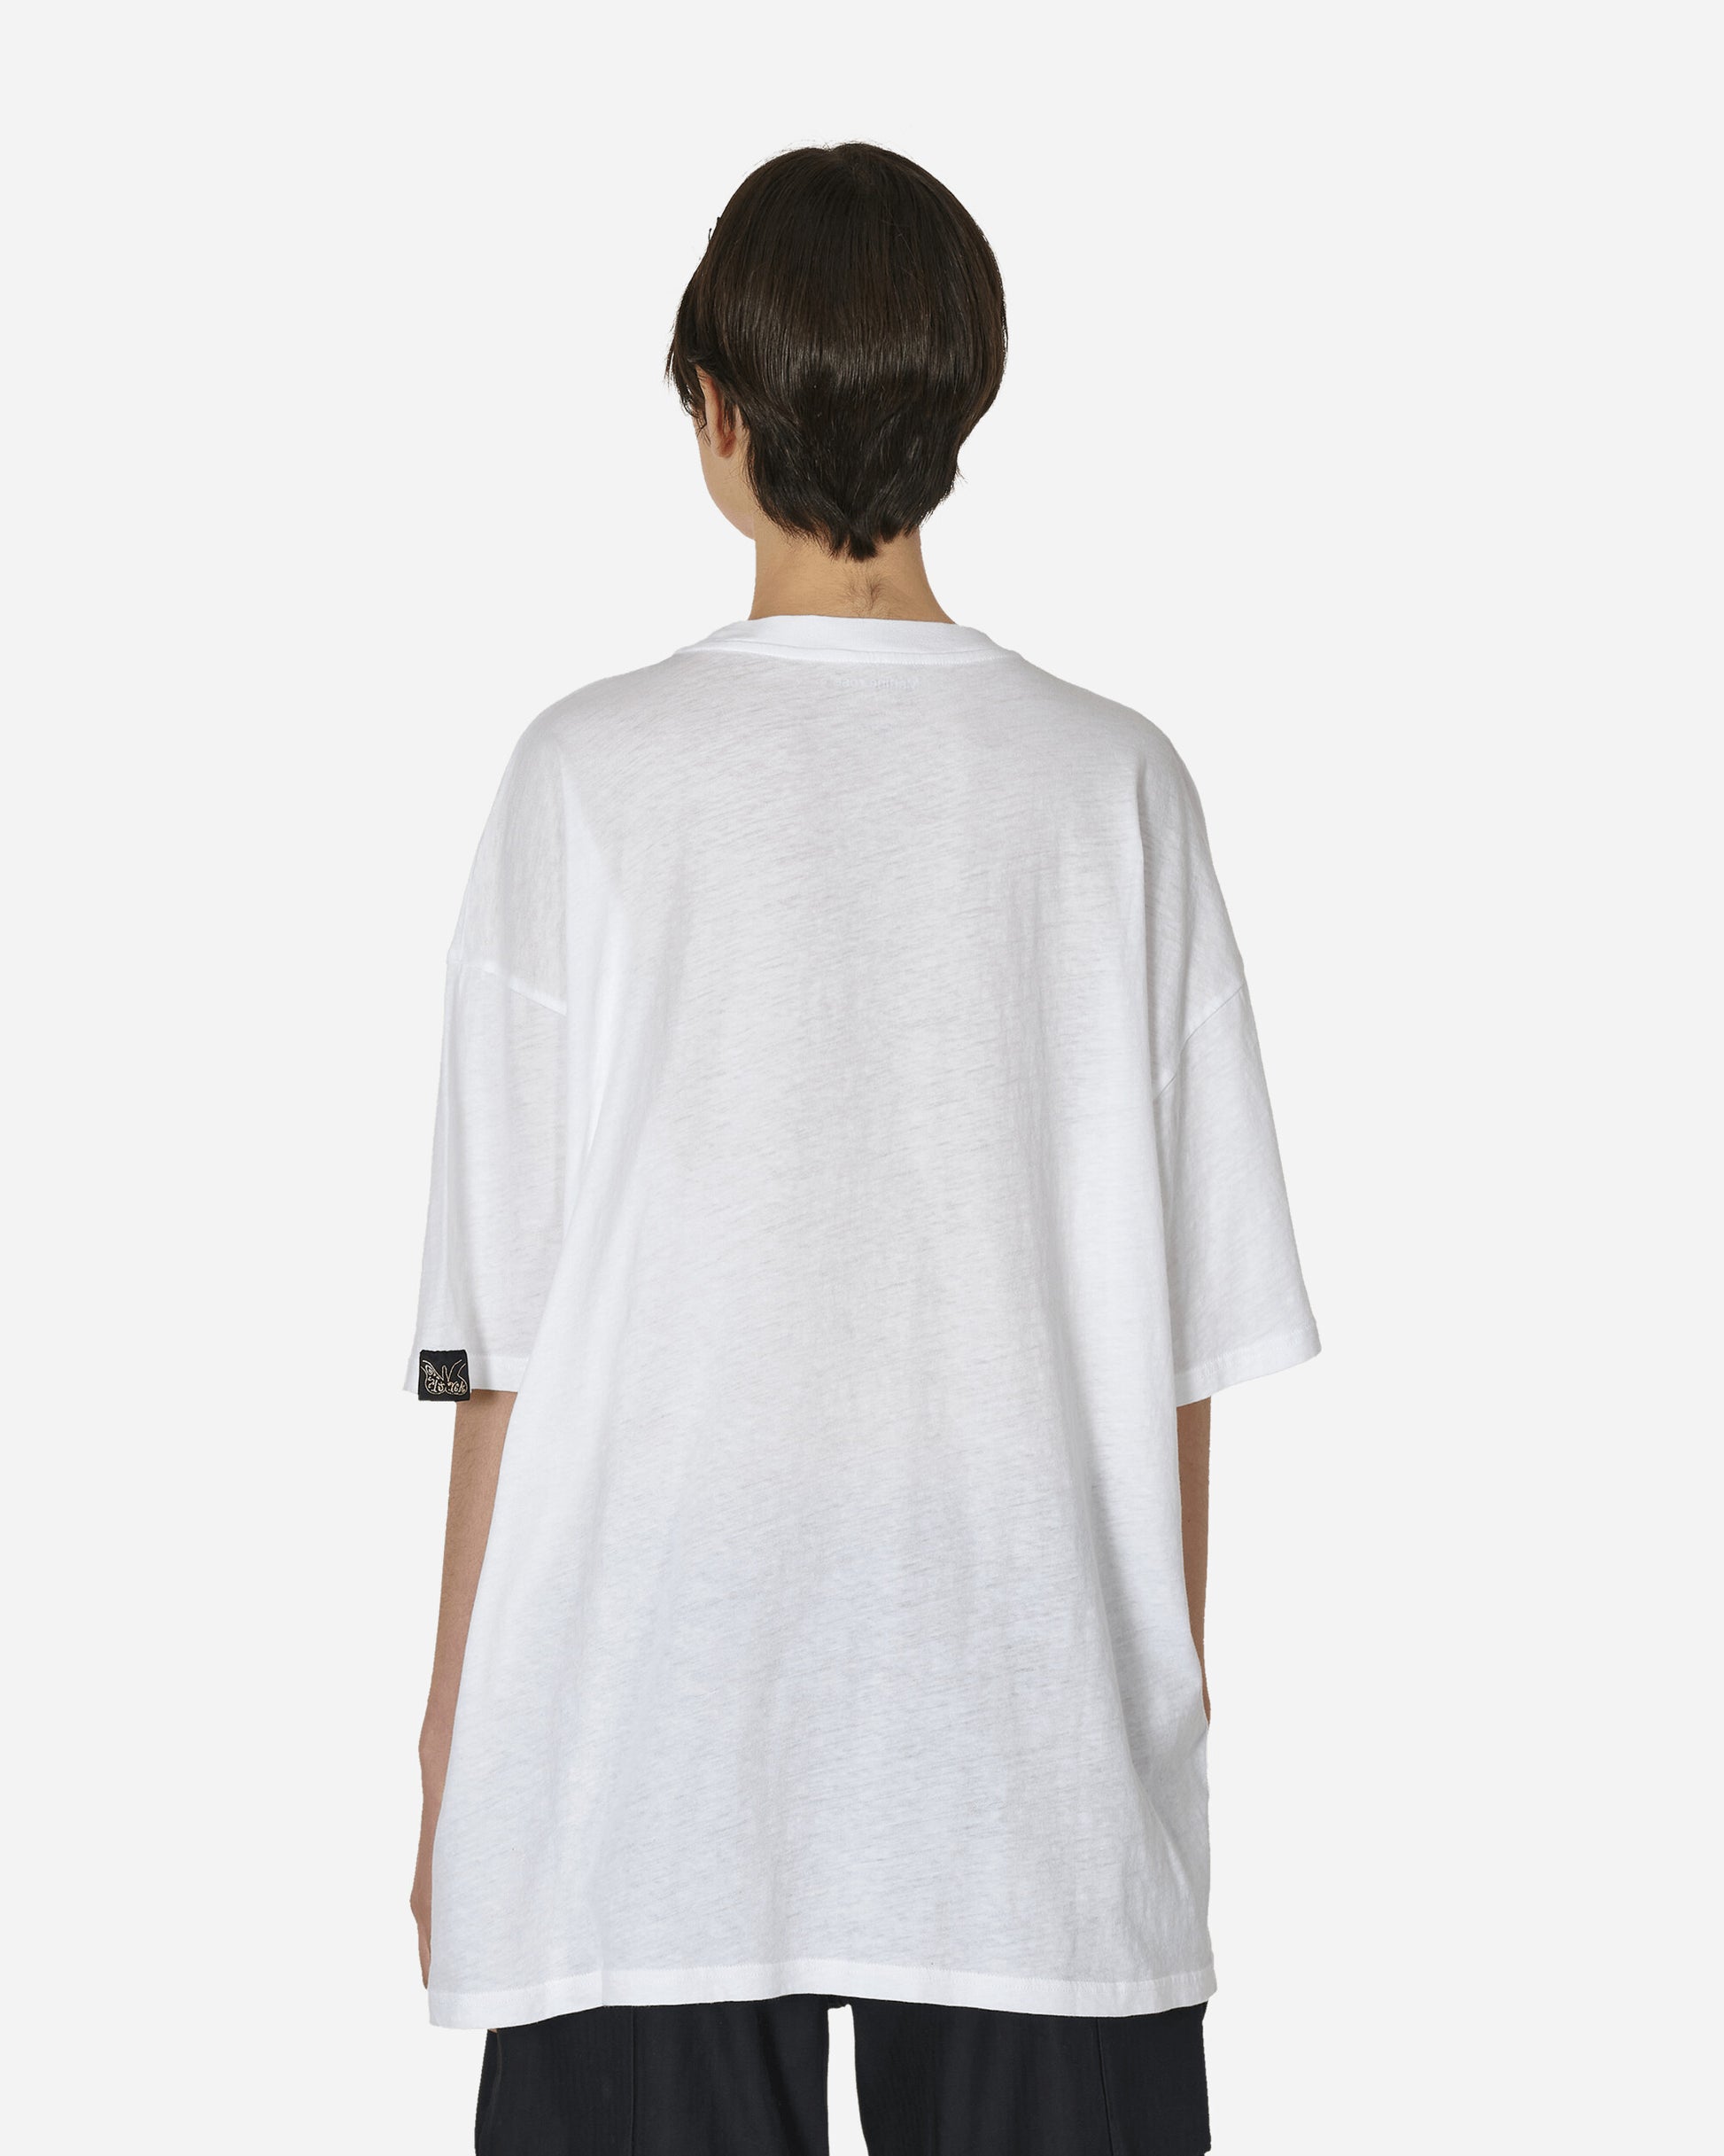 Martine Rose Wmns Oversized Ss T-Shirt White/Hanging T-Shirts Shortsleeve MRSS24-621B WHIHAN